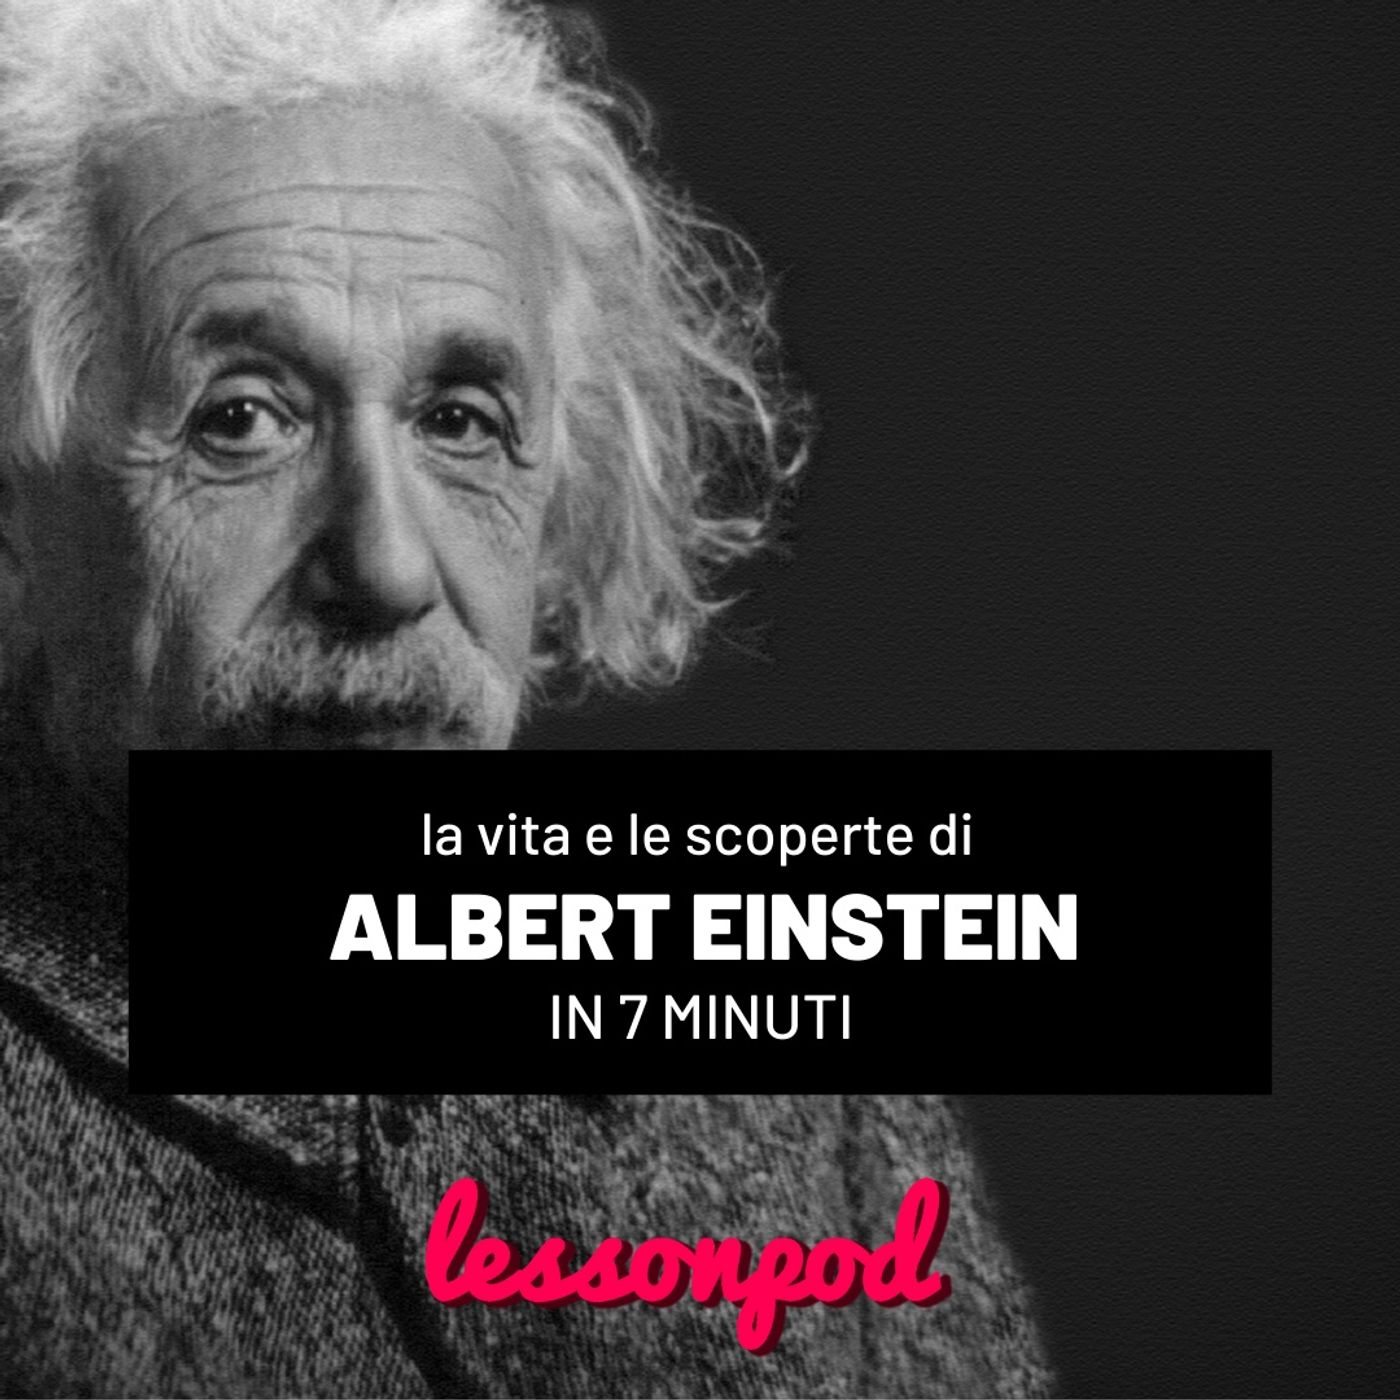 La vita e le scoperte di Albert Einstein in 7 minuti